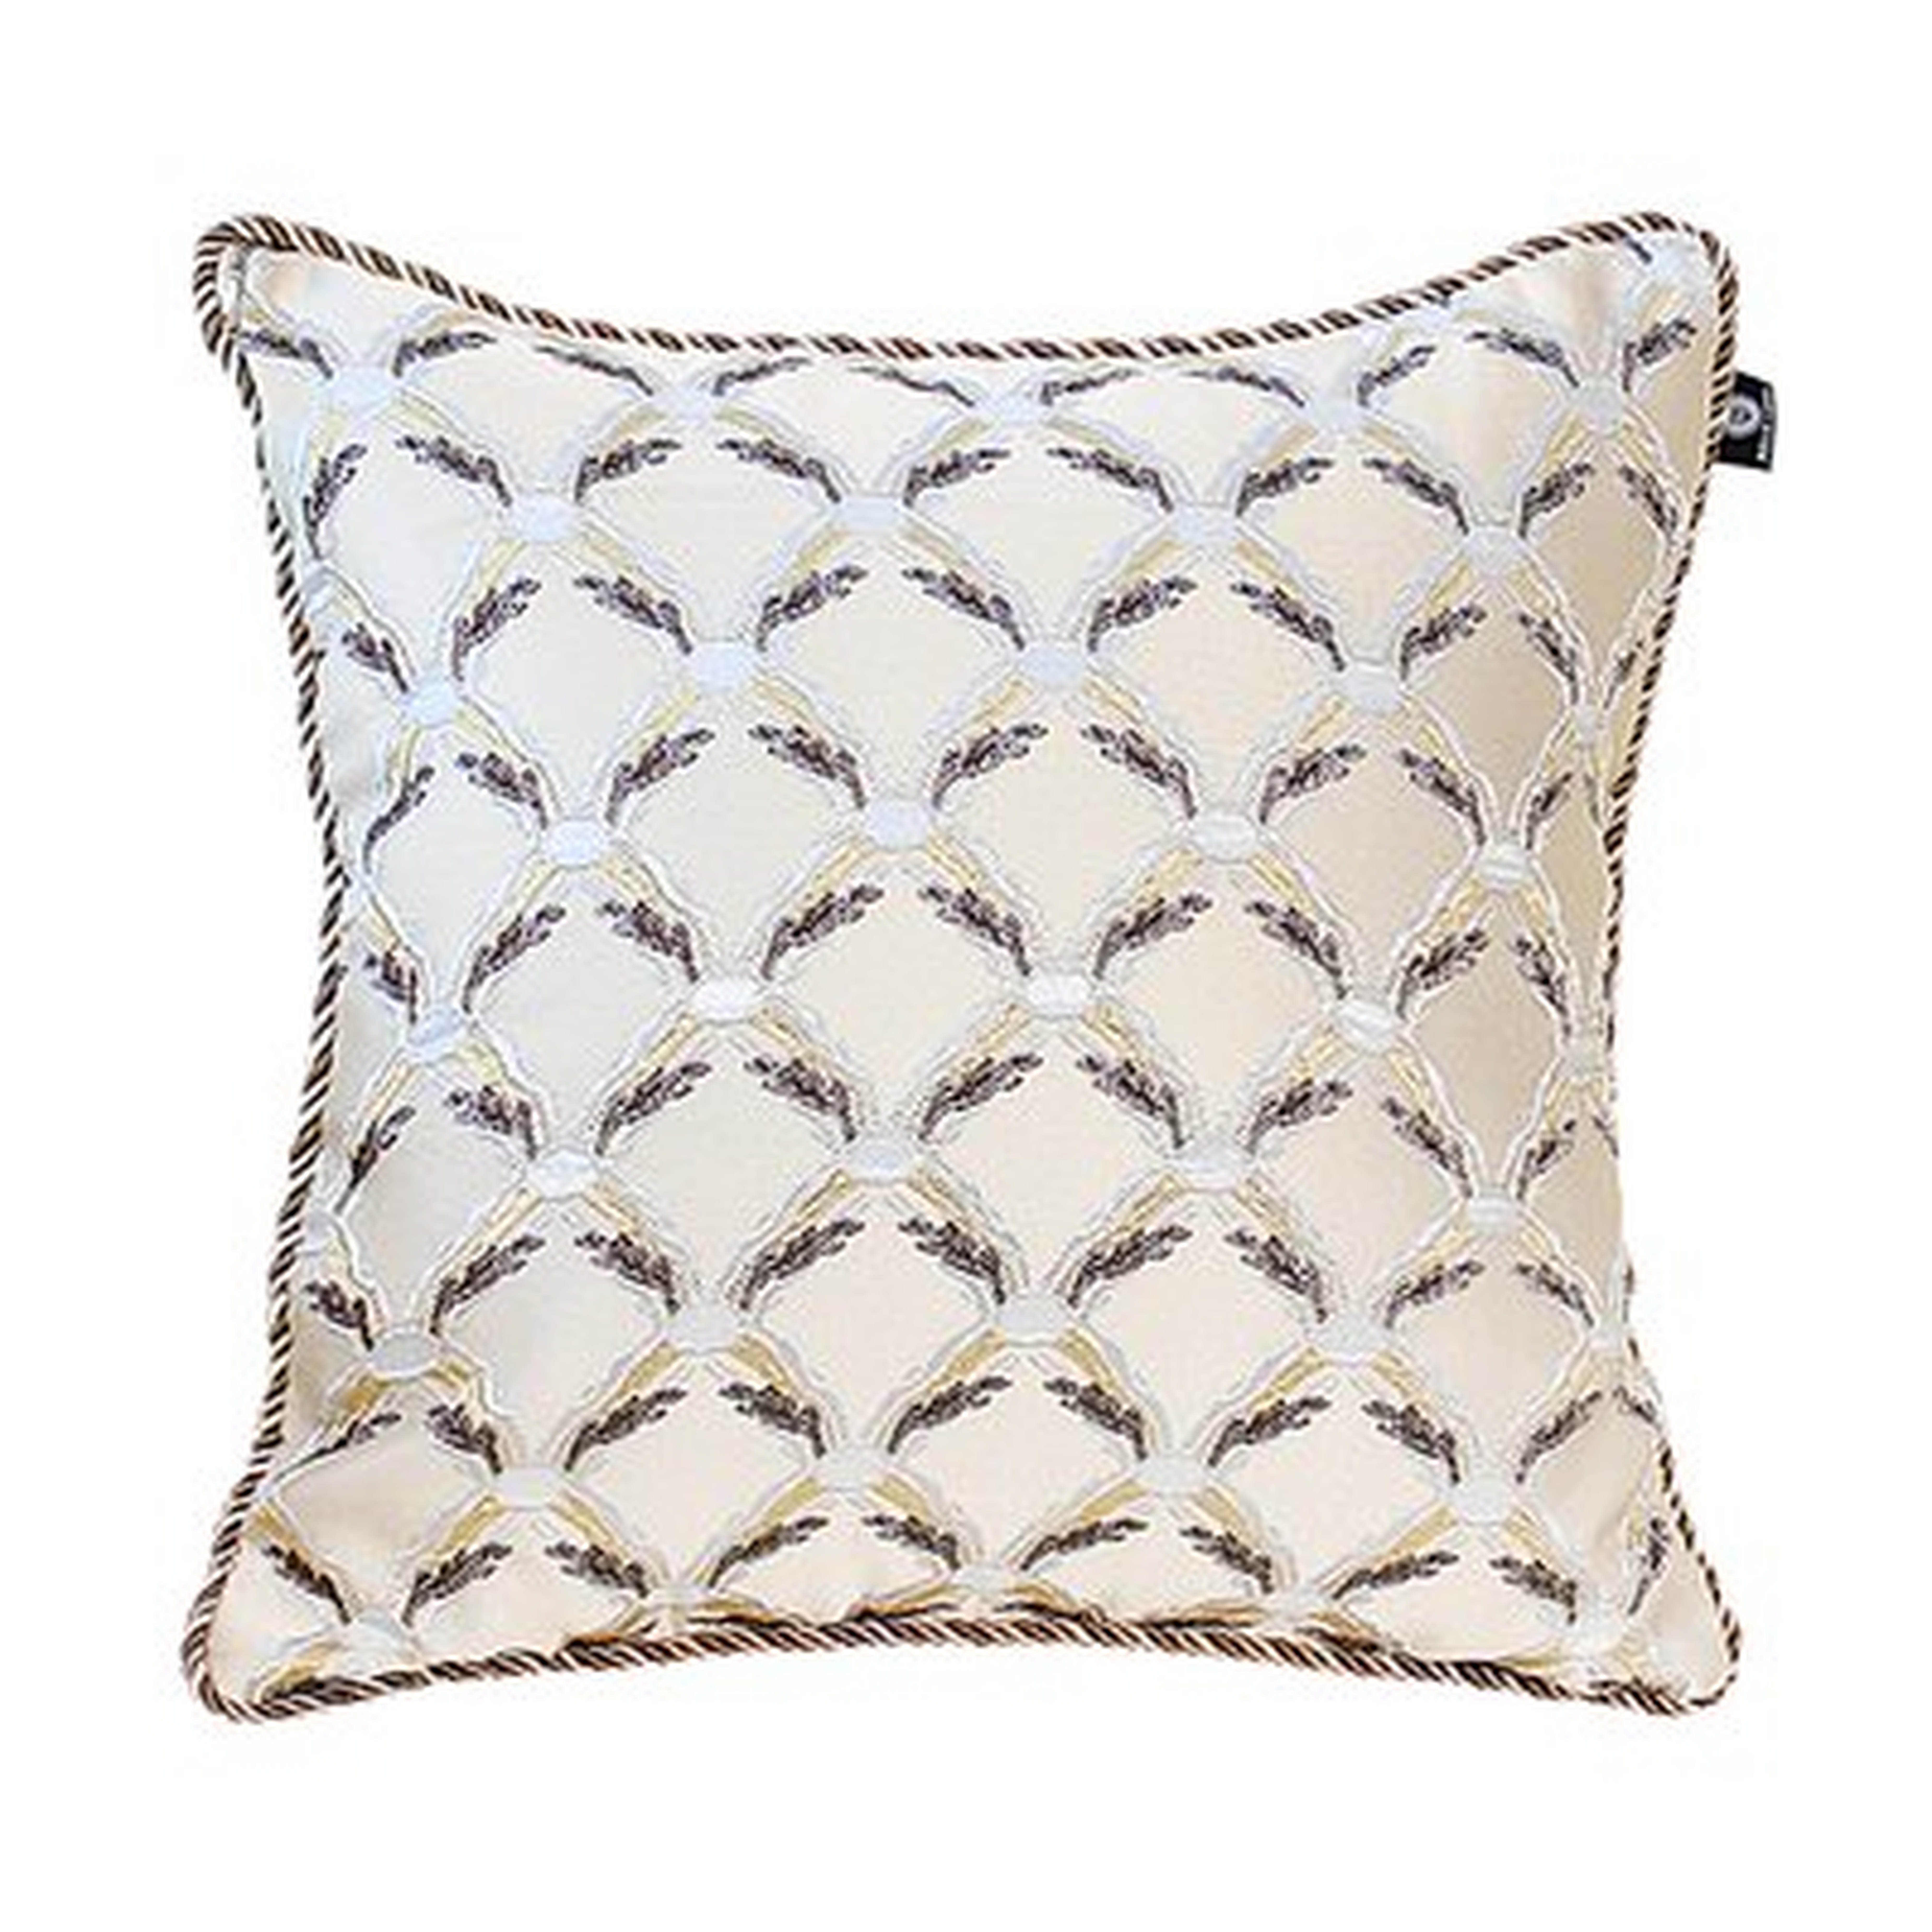 Delrick Traditional Jacquard Pillow Cover - Wayfair